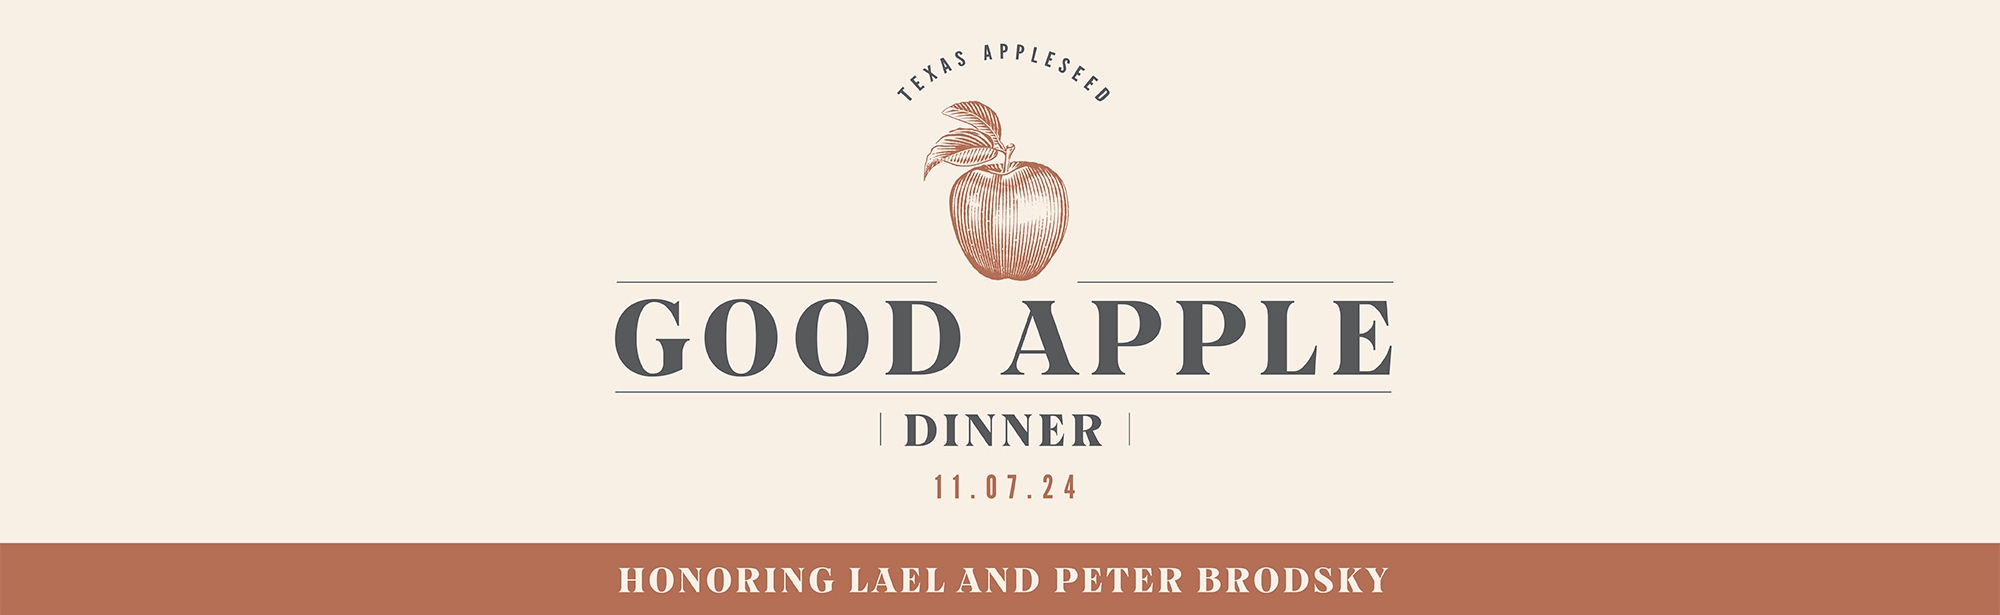 Texas Appleseed Good Apple Dinner 11-7-24 Honoring Lael and Peter Brodsky